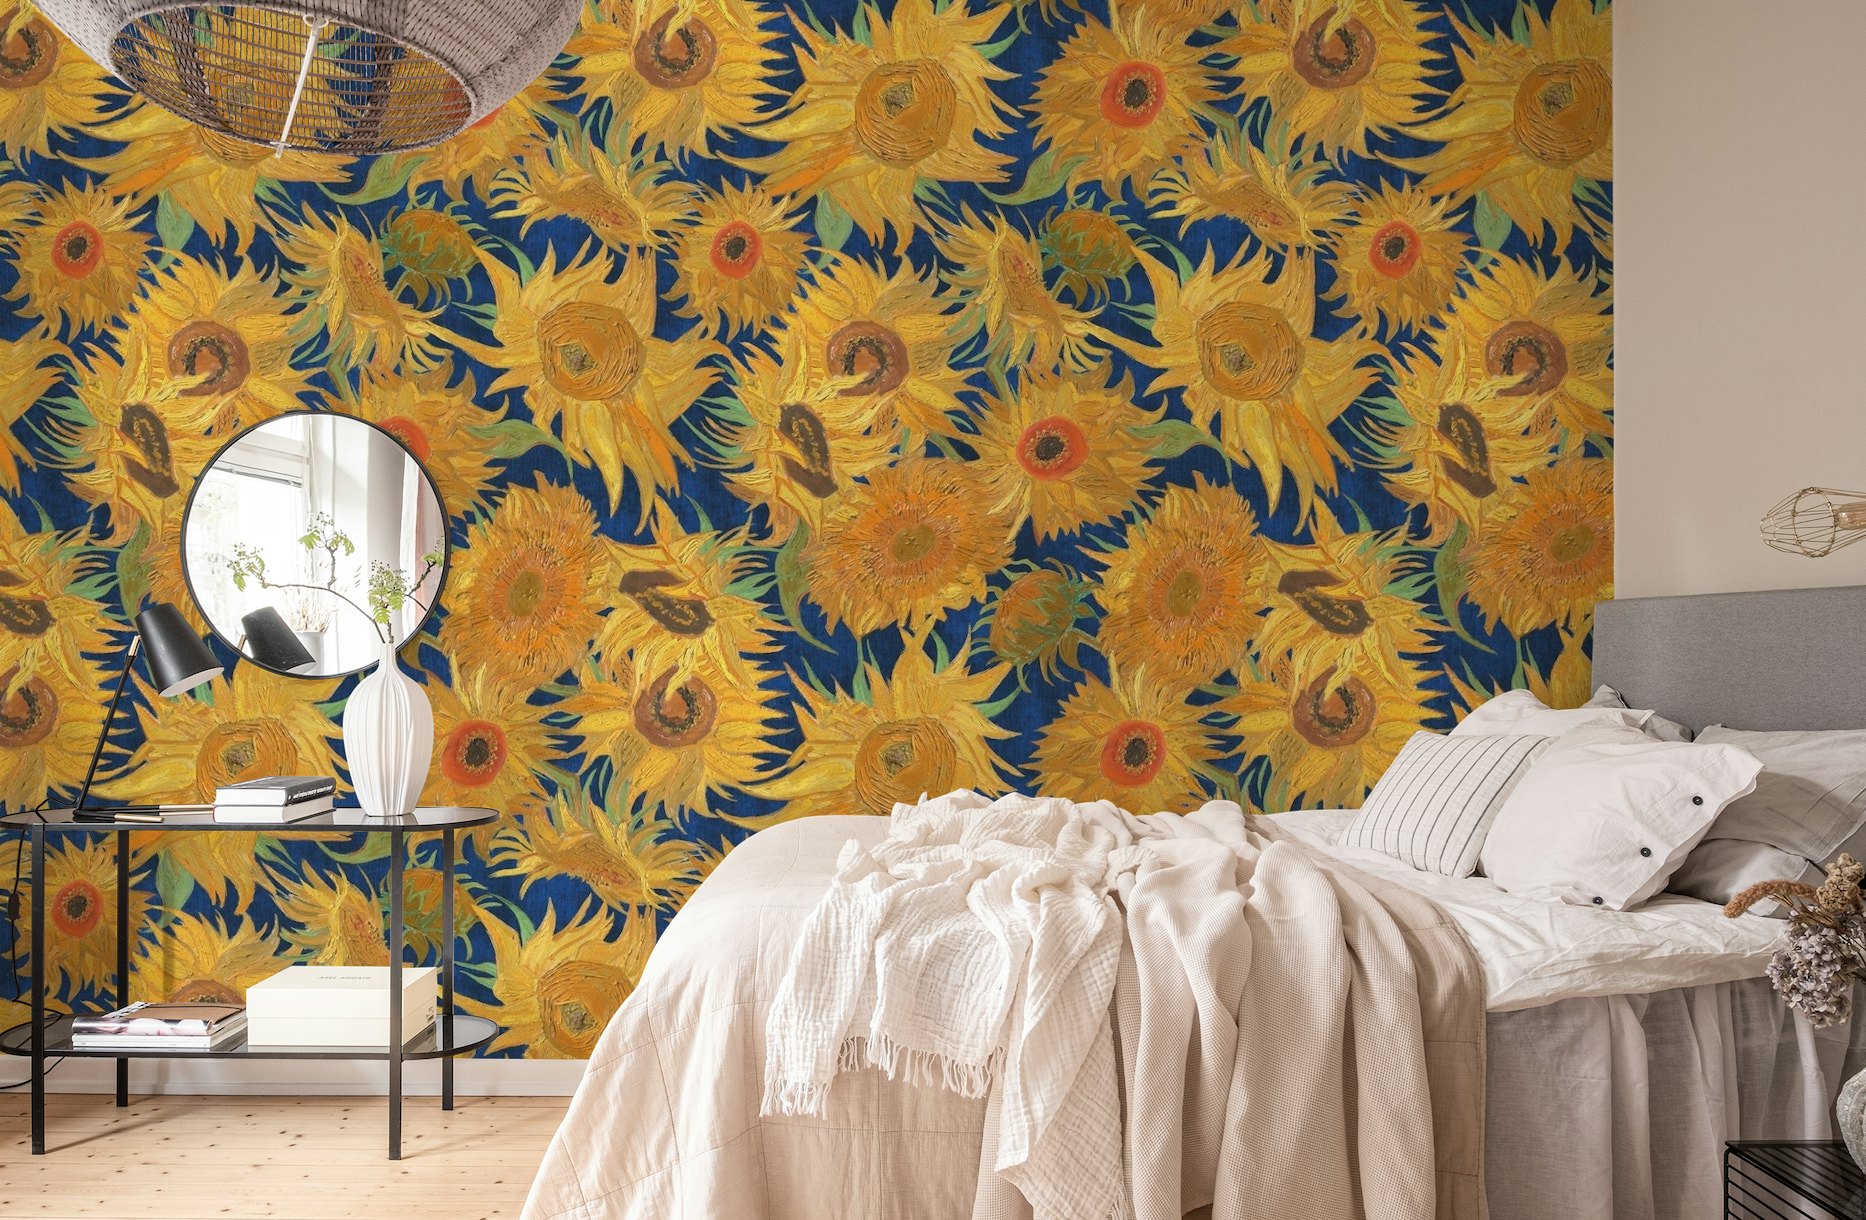 Wallpaper featuring design of Van Gogh's Sunflowers in indigo color.